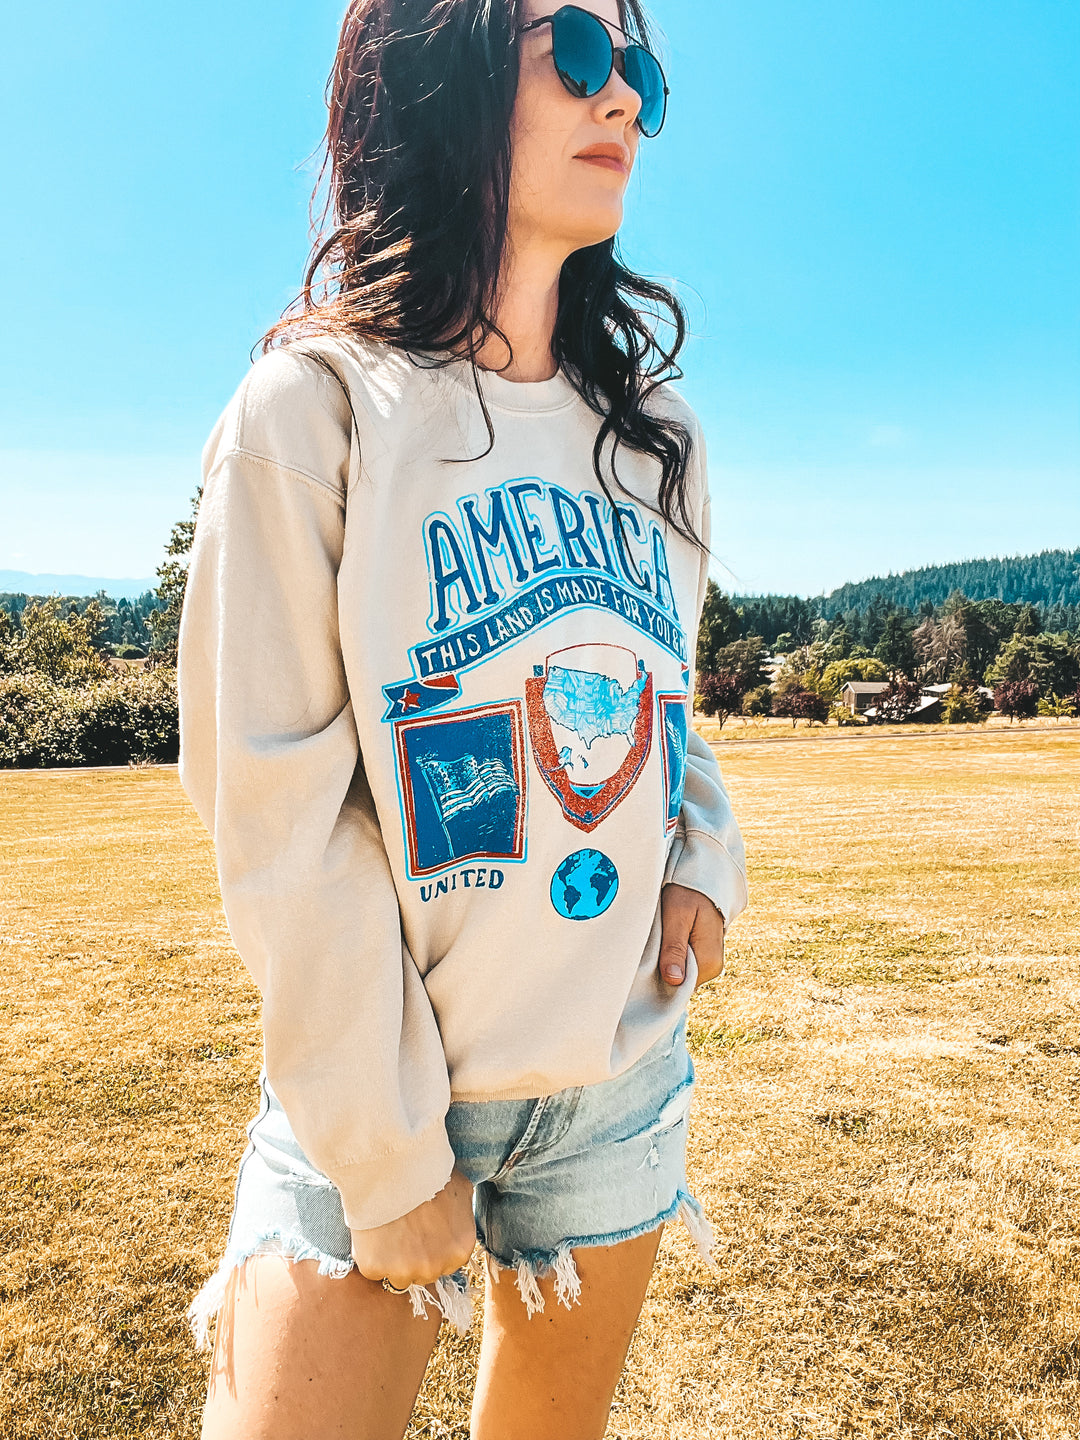 Vintage America Sweatshirt